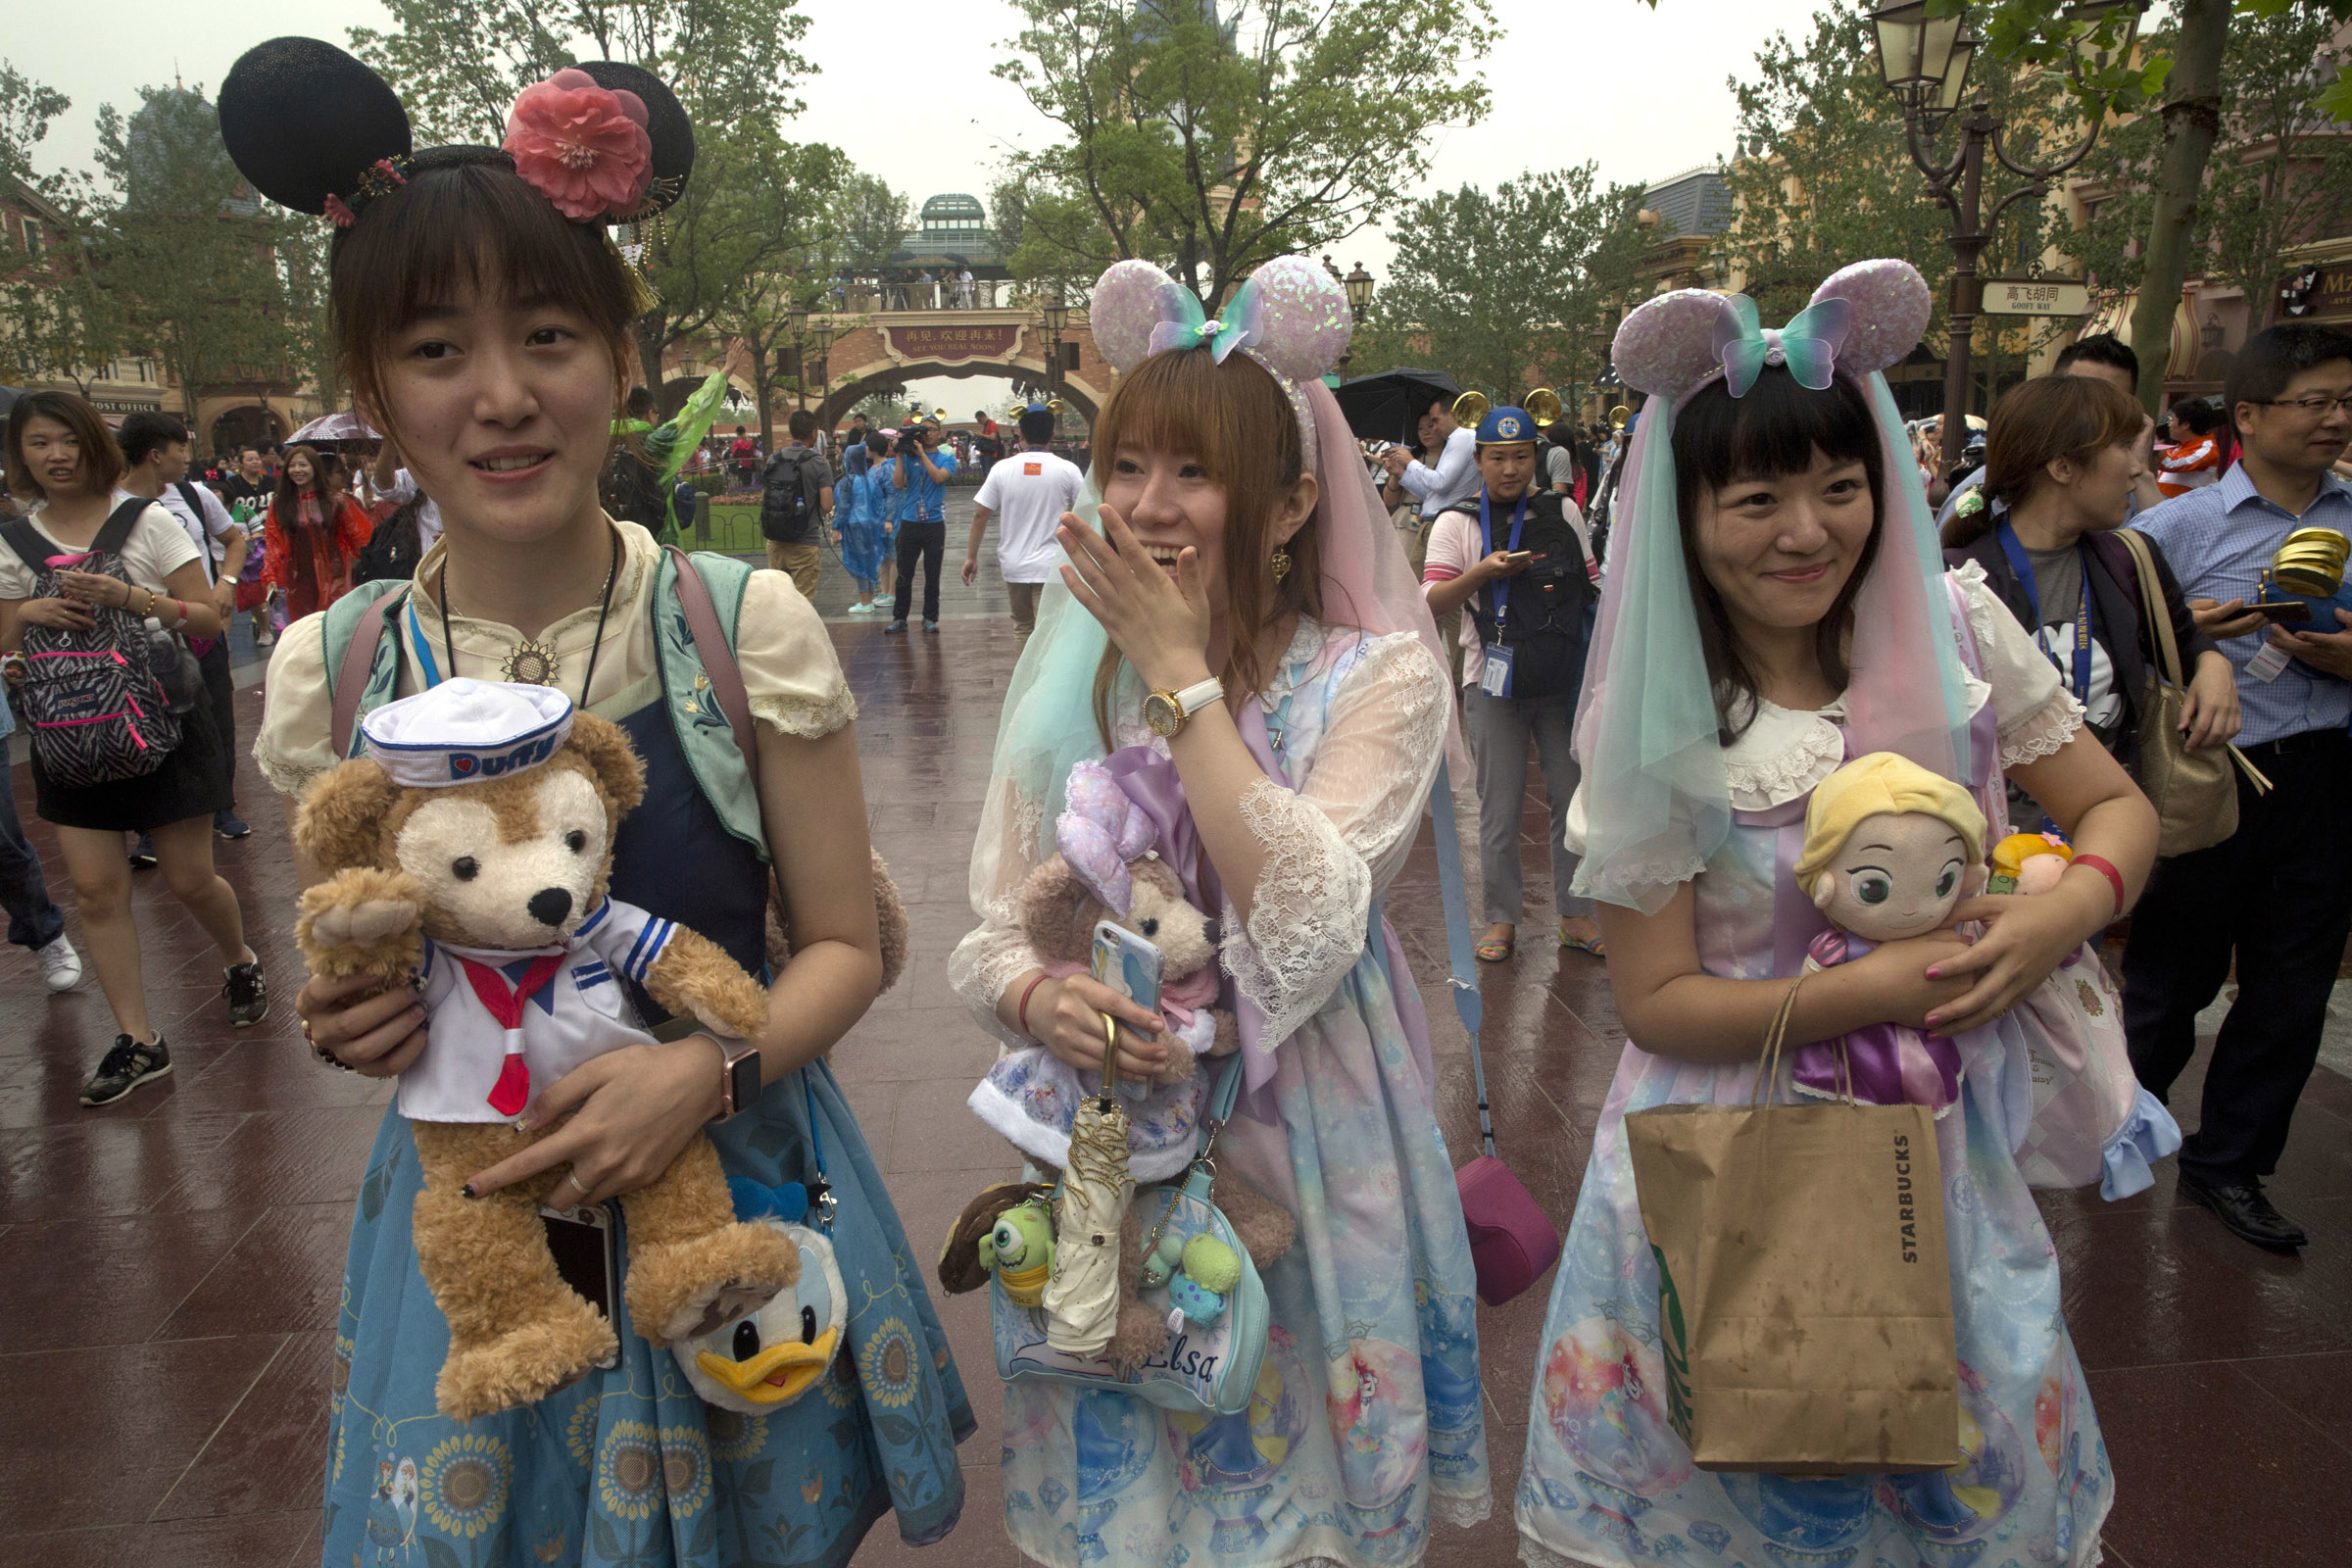 PHOTOS & SOCIAL: Disneyland opens in Shanghai